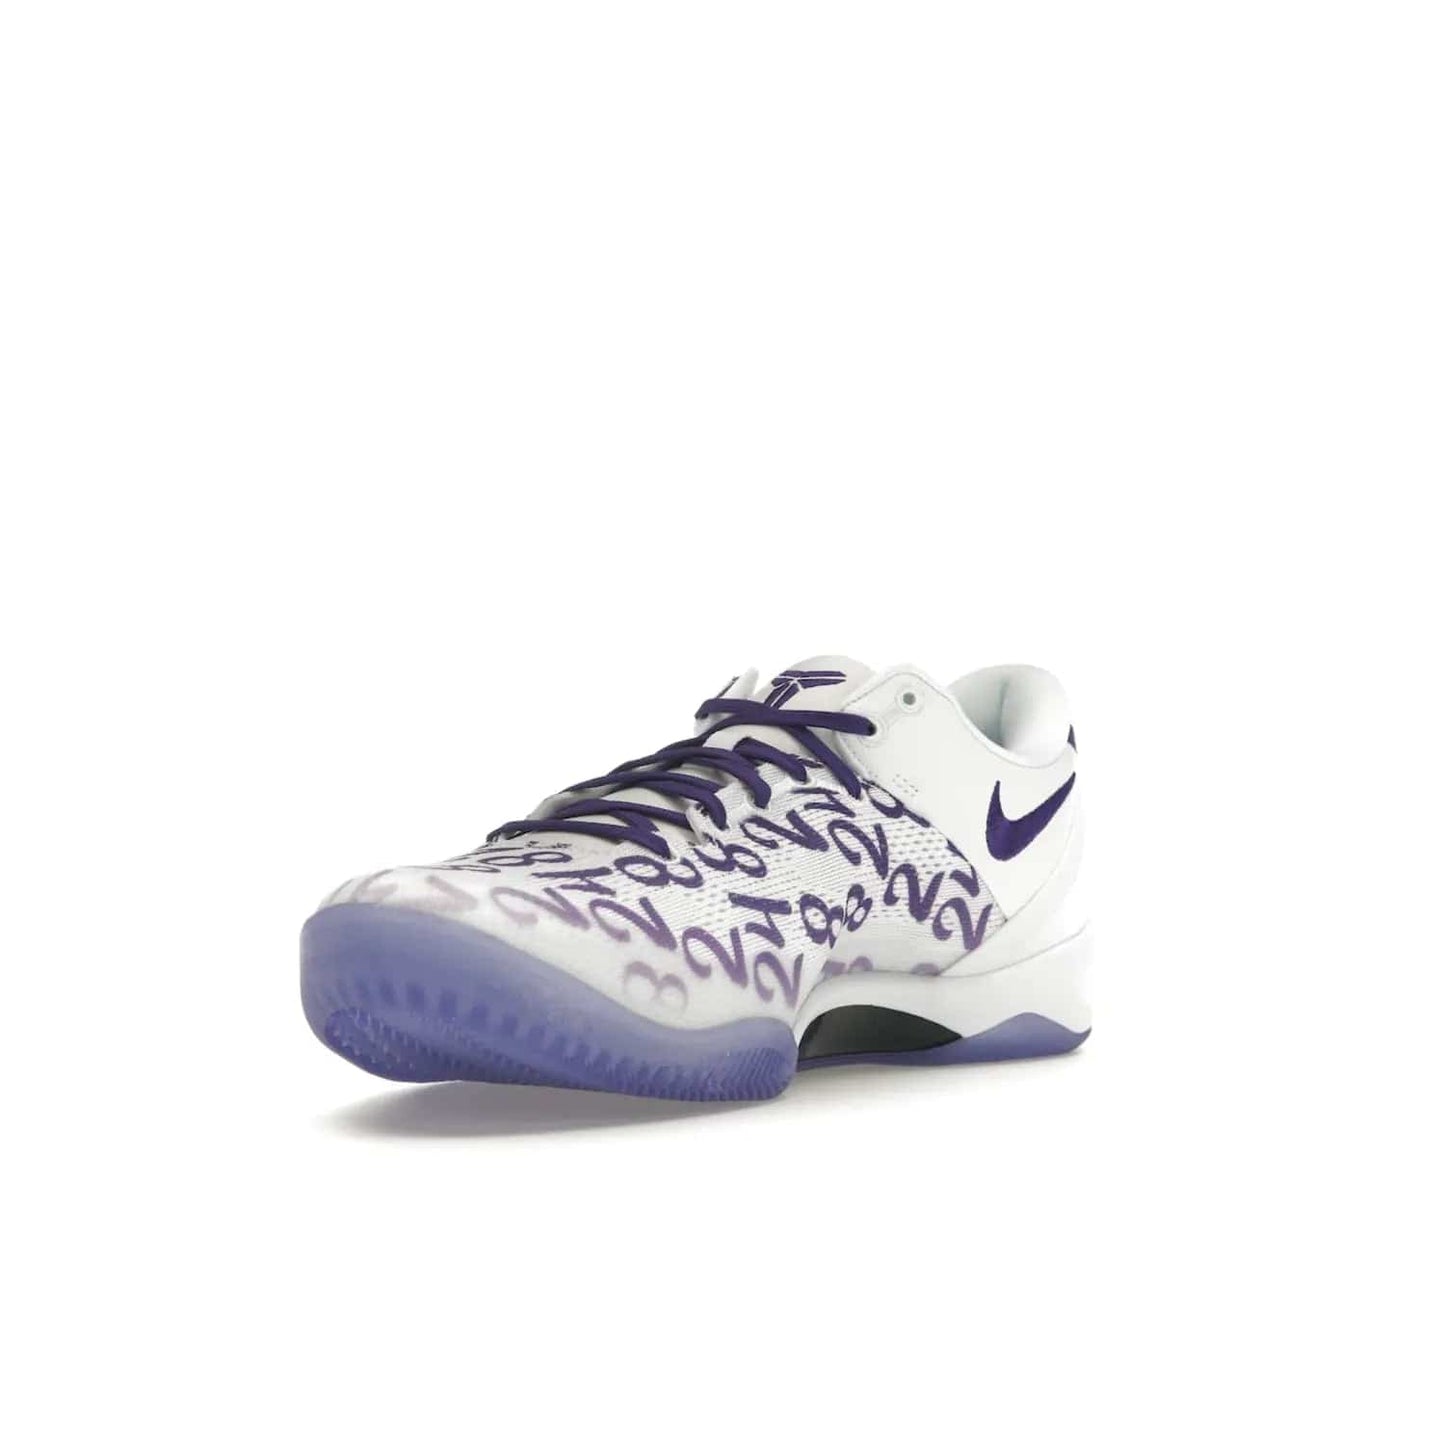 Nike Kobe 8 Protro Court Purple - Image 14 - Only at www.BallersClubKickz.com - 